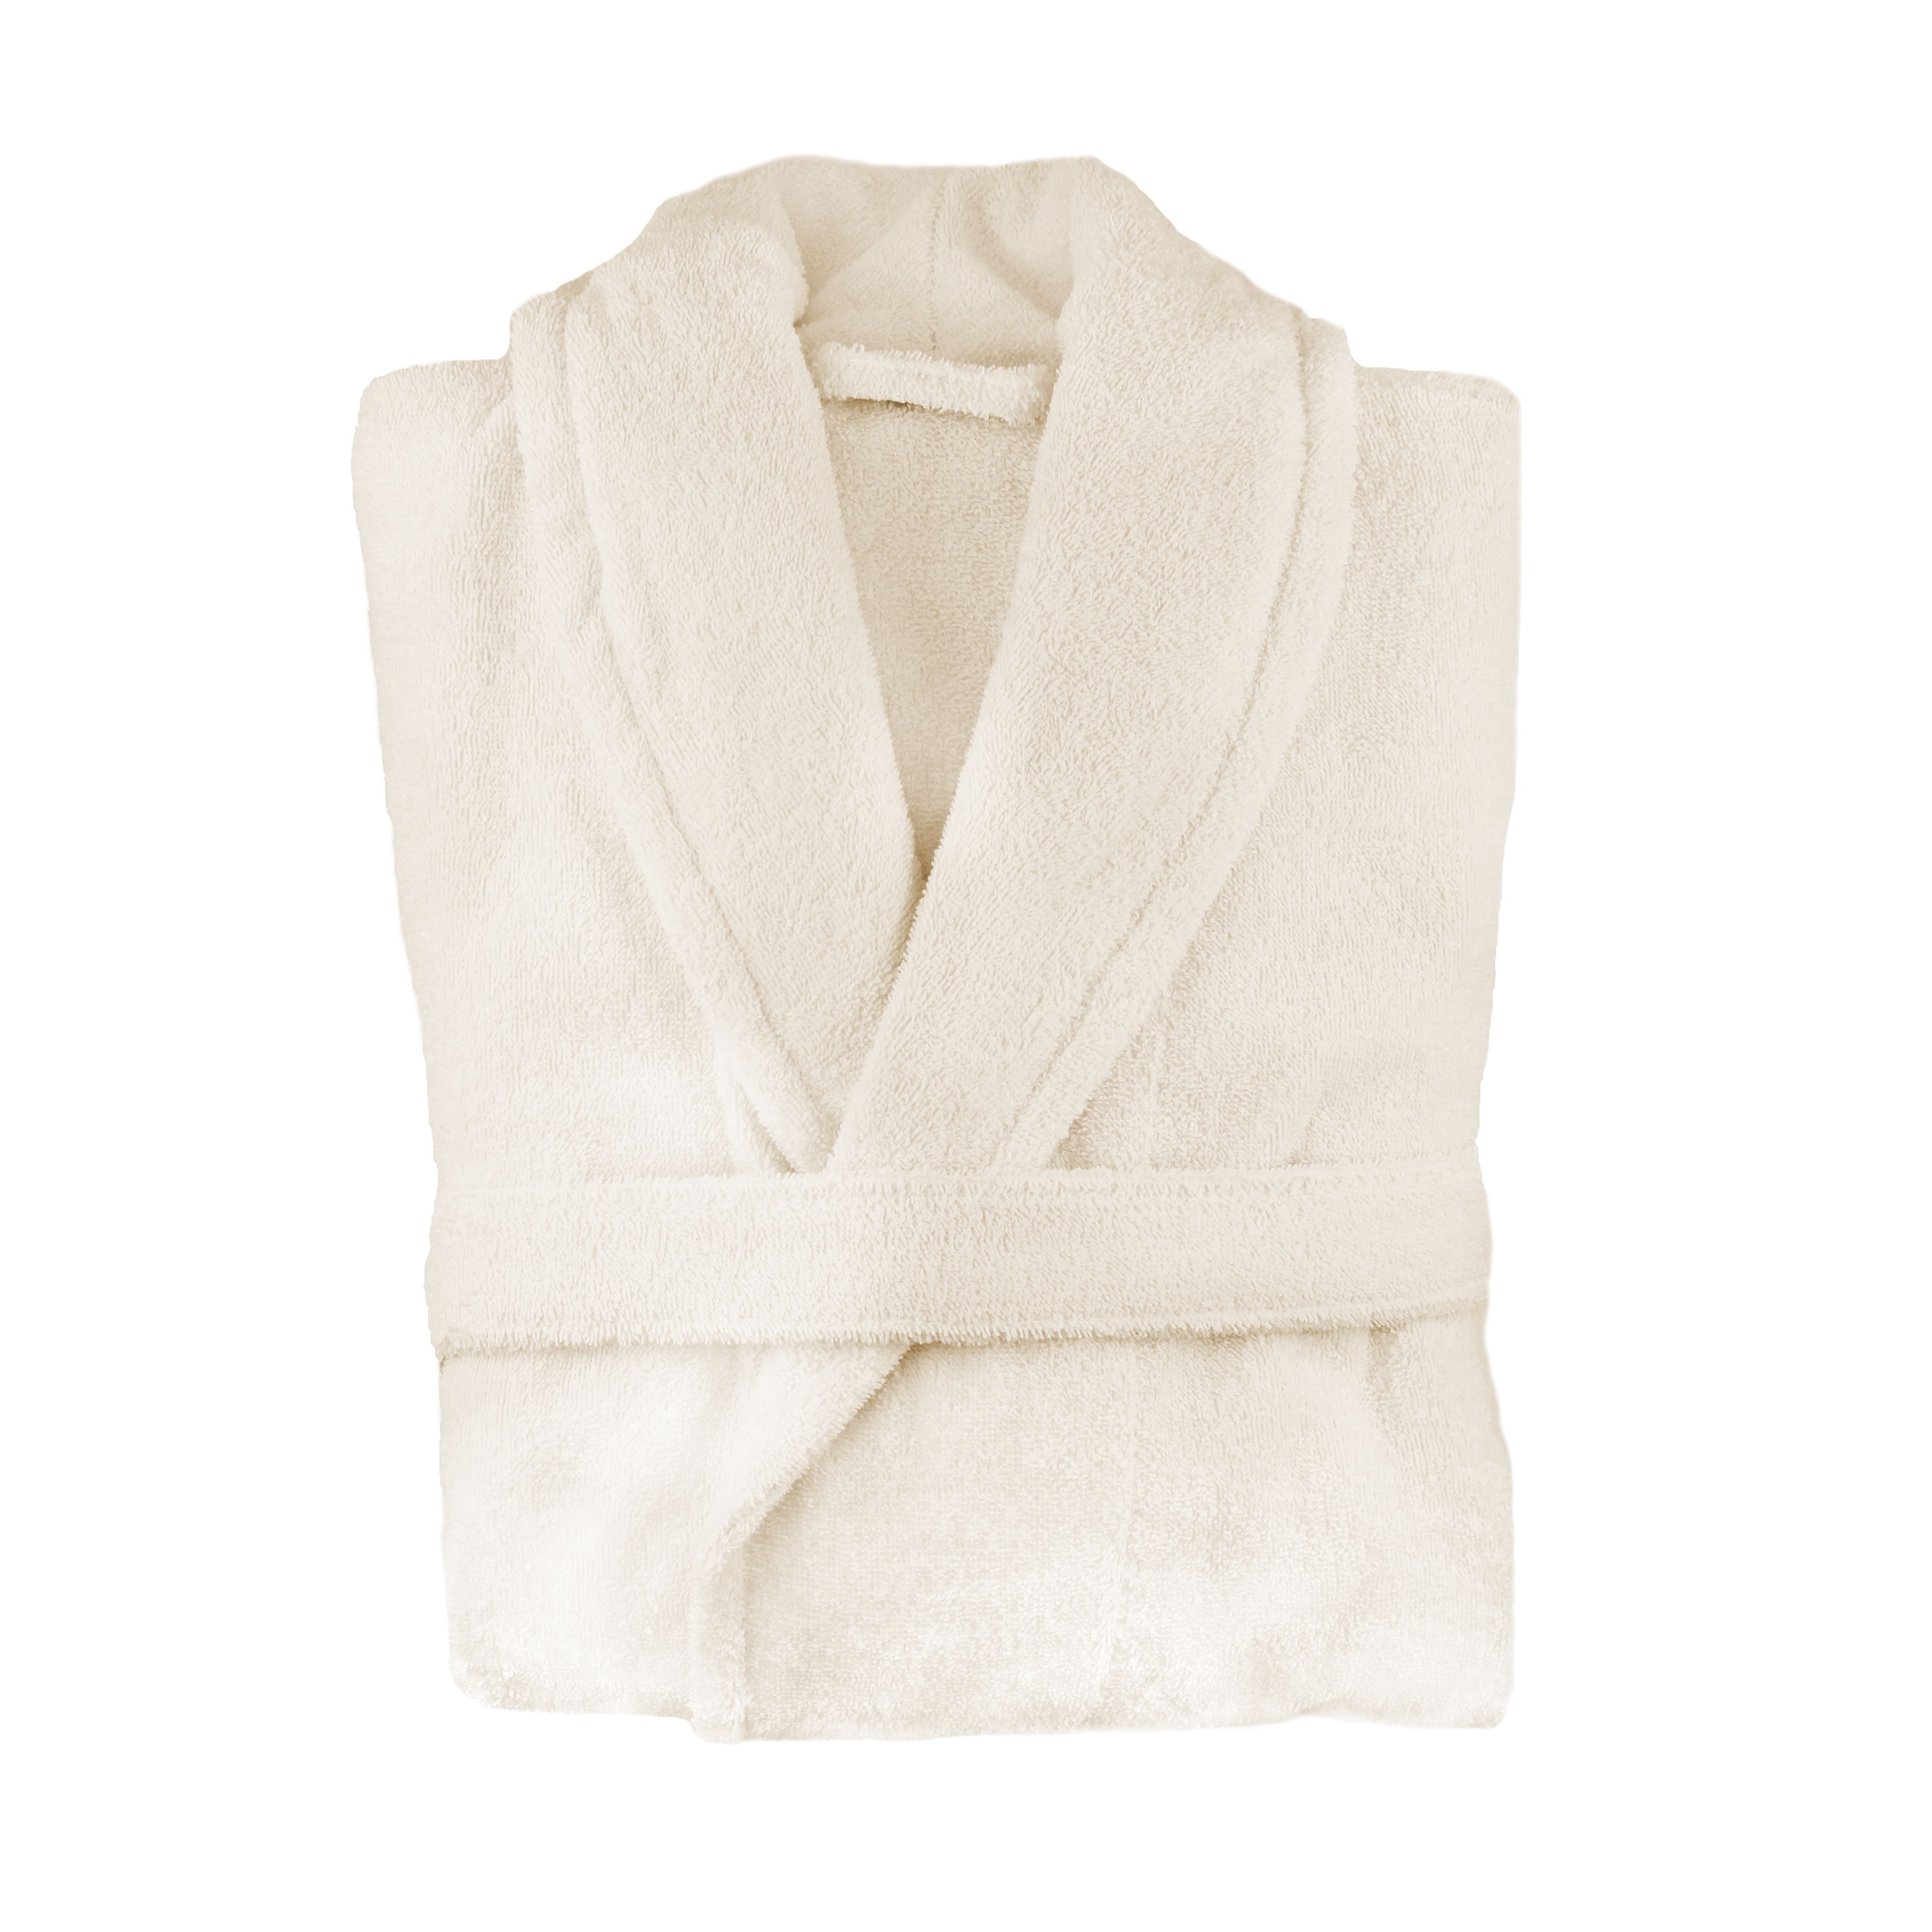 Chenille Robe 100% Cotton Dressing Gown Bathrobe House Coat Buttoned | eBay